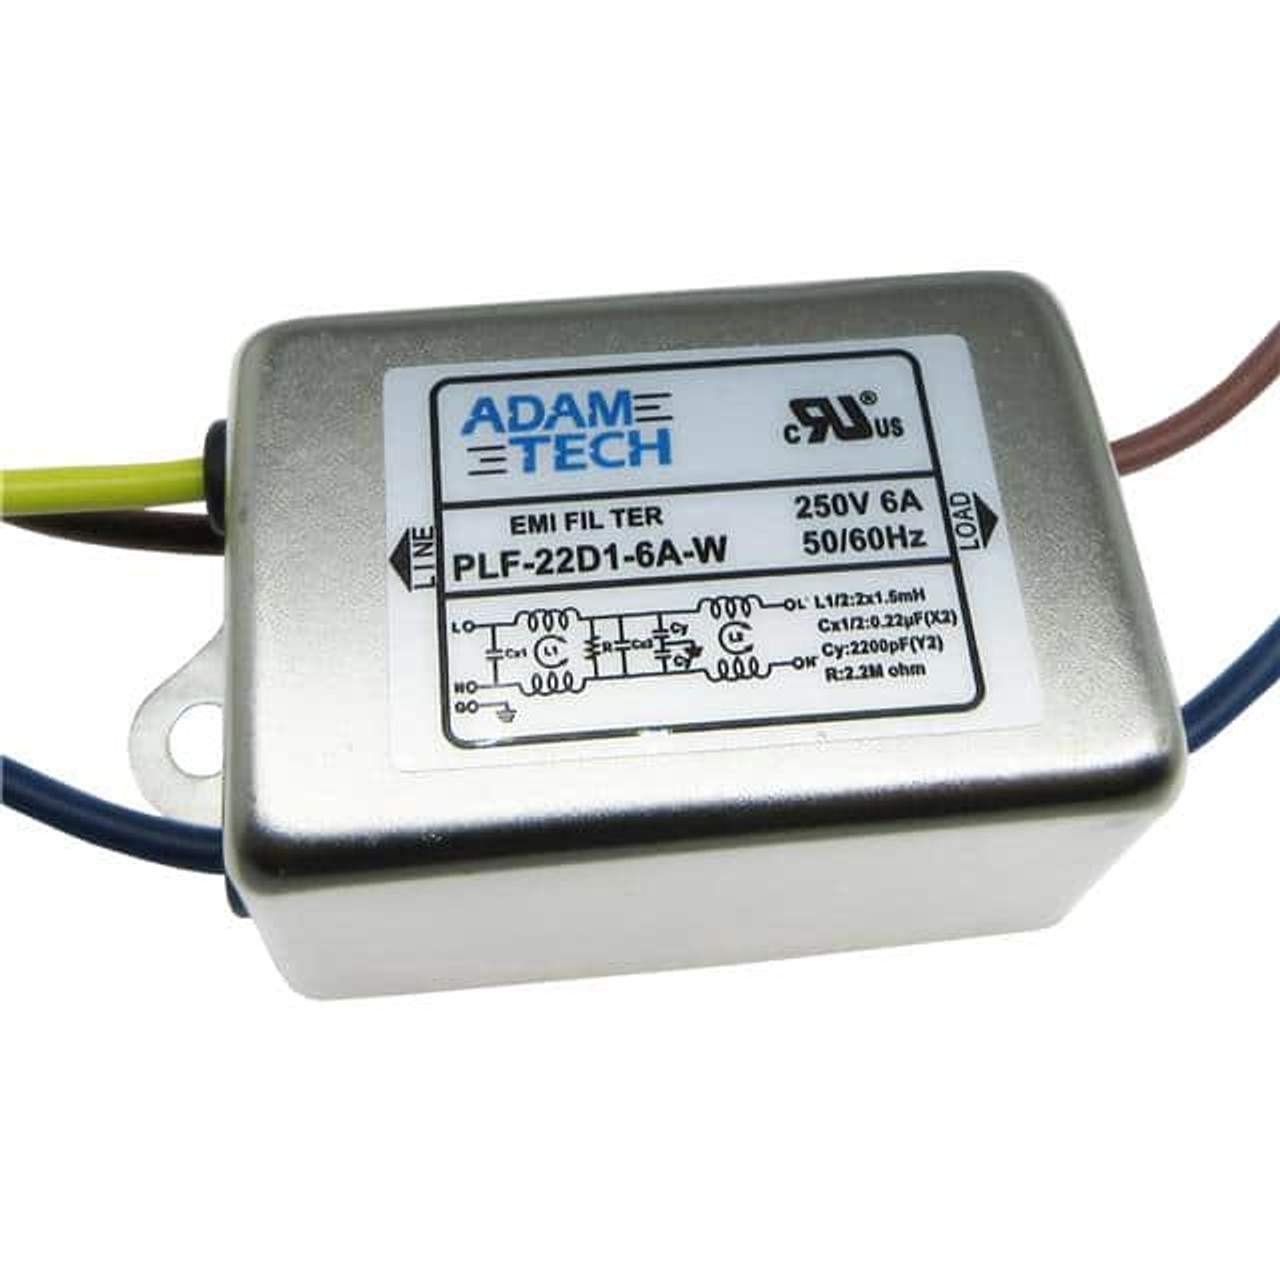 AdamTech PLF-22D1-6A-W Single Phase Filters